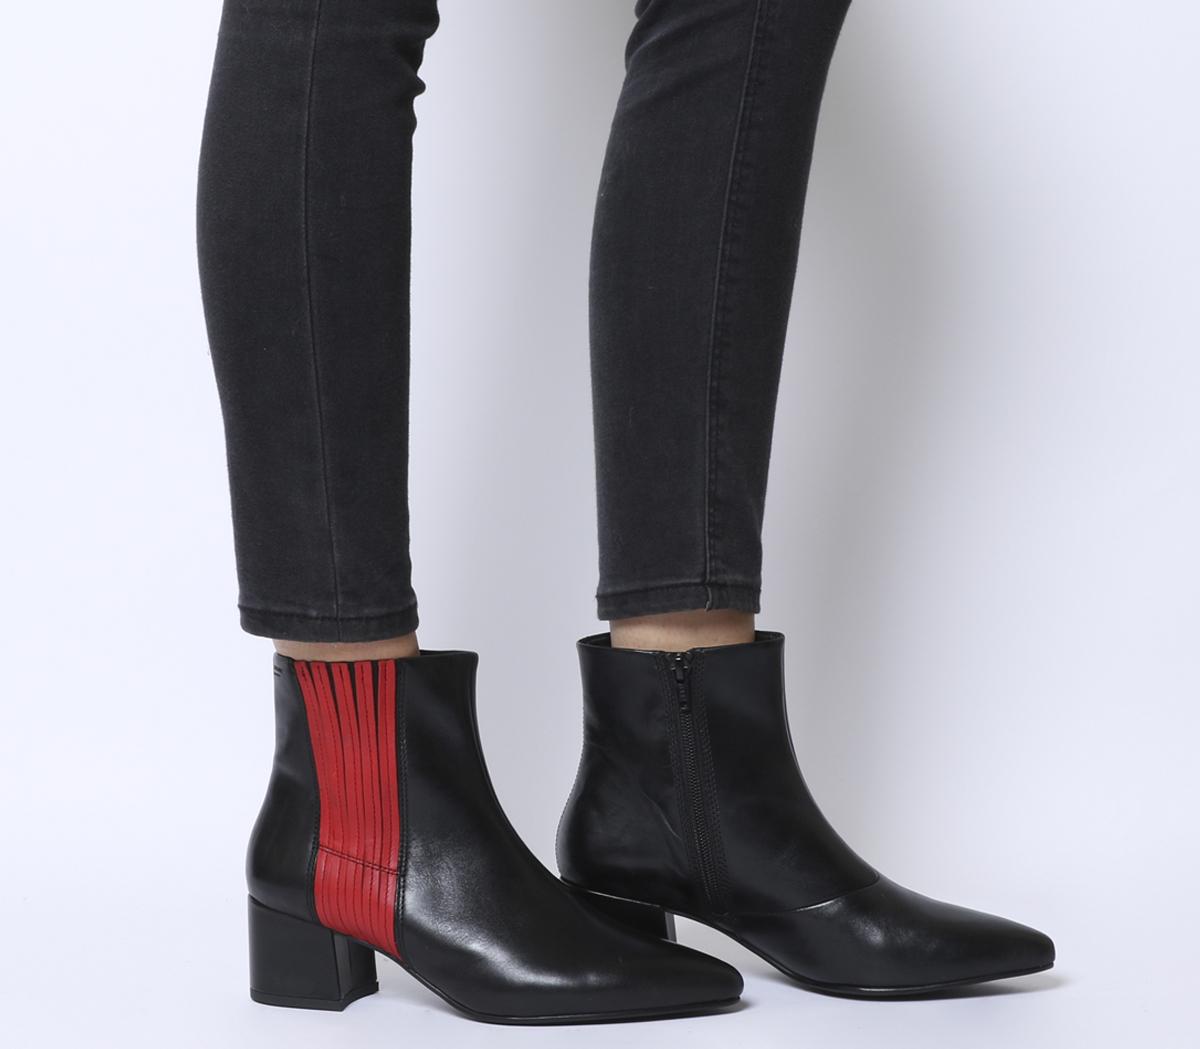 Vagabond ShoemakersMya Ankle BootsBlack Red Stripe